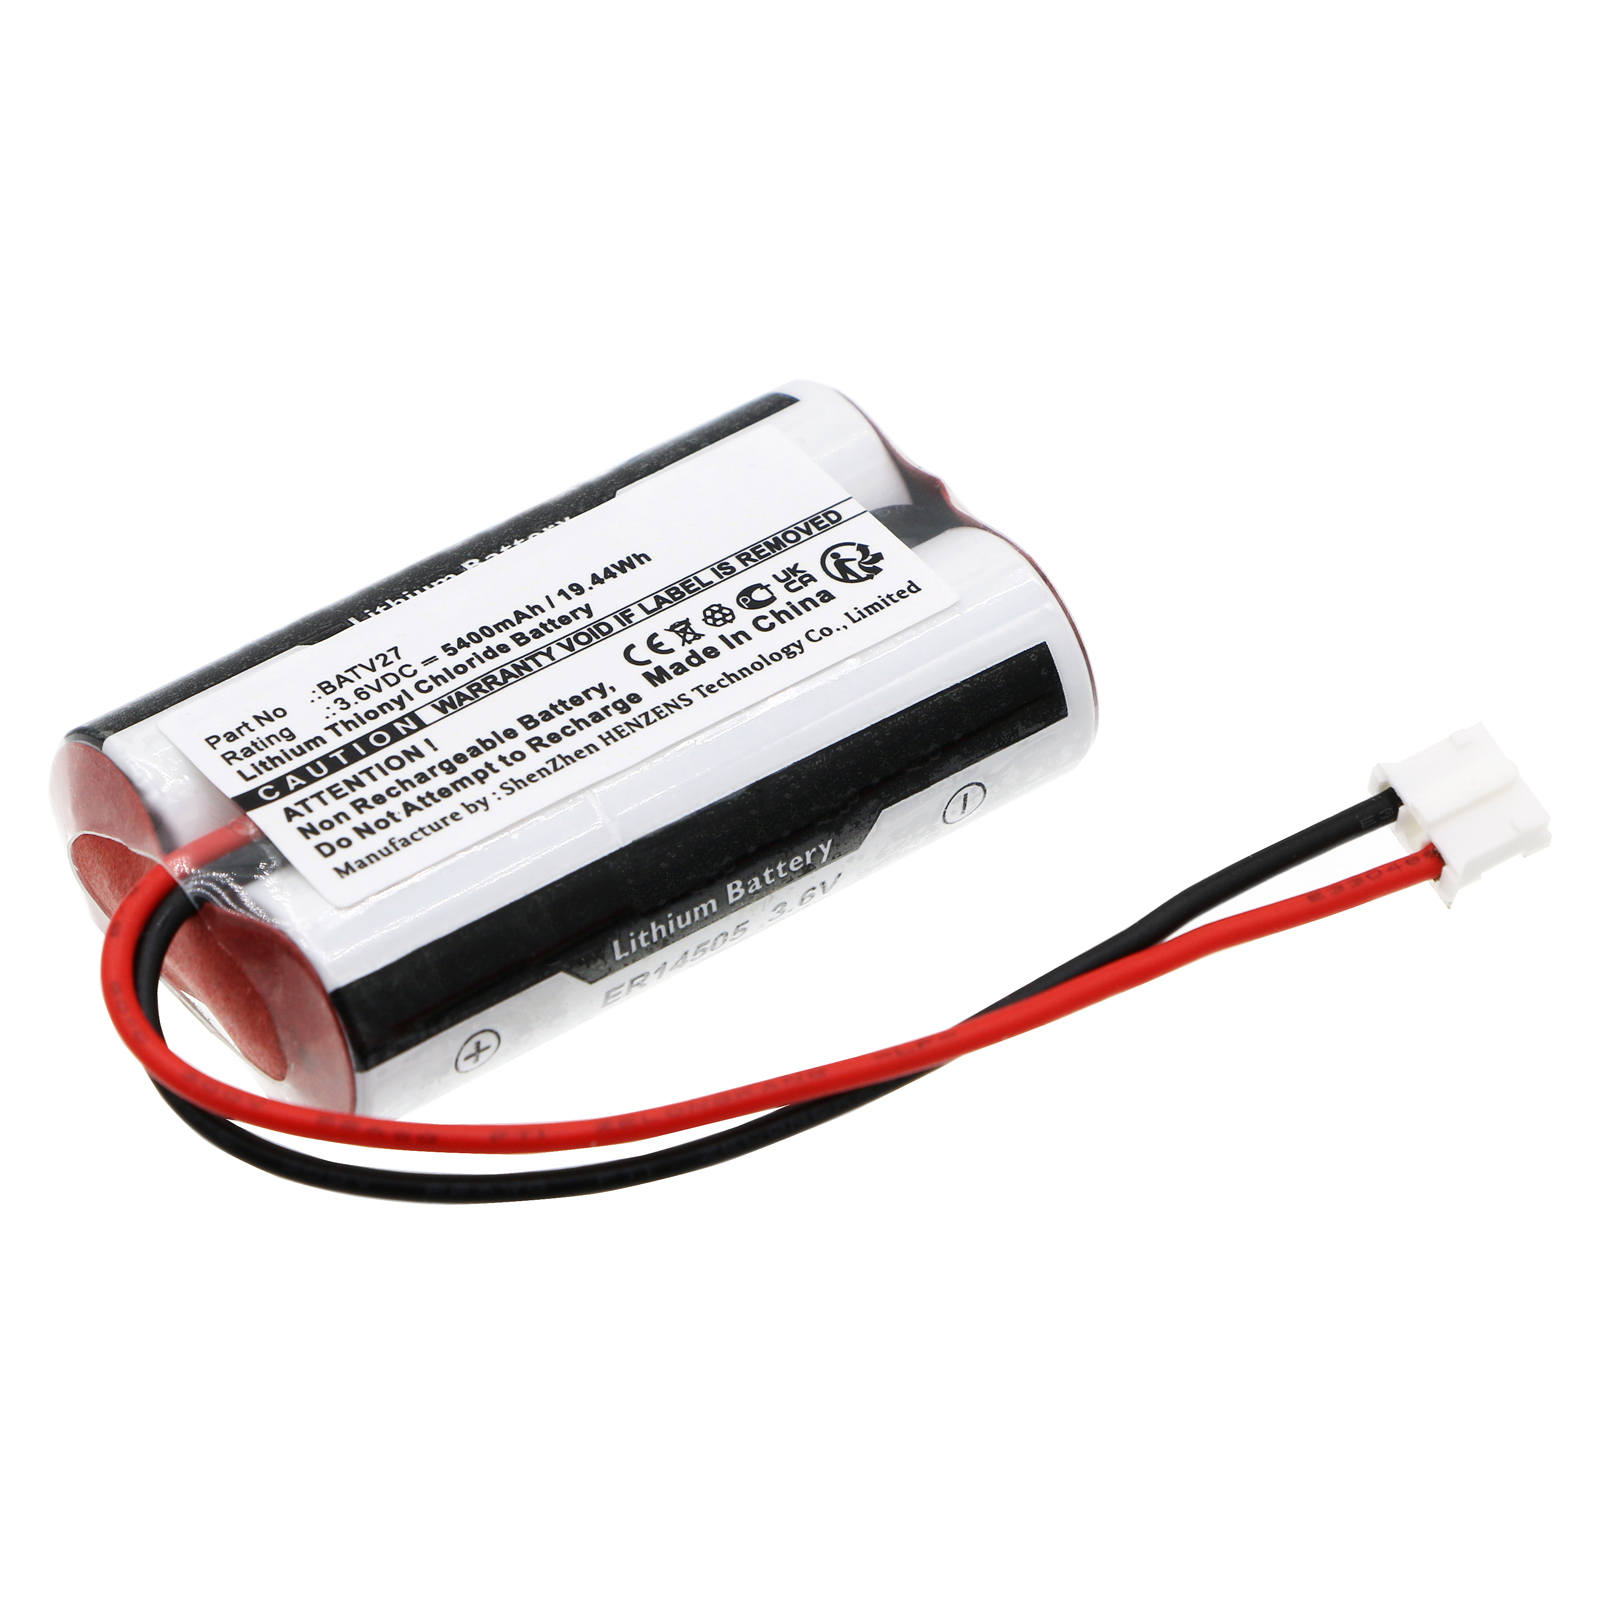 Synergy Digital Alarm System Battery, Compatible with DAITEM BATV27 Alarm System Battery (Li-SOCl2, 3.6V, 5400mAh)